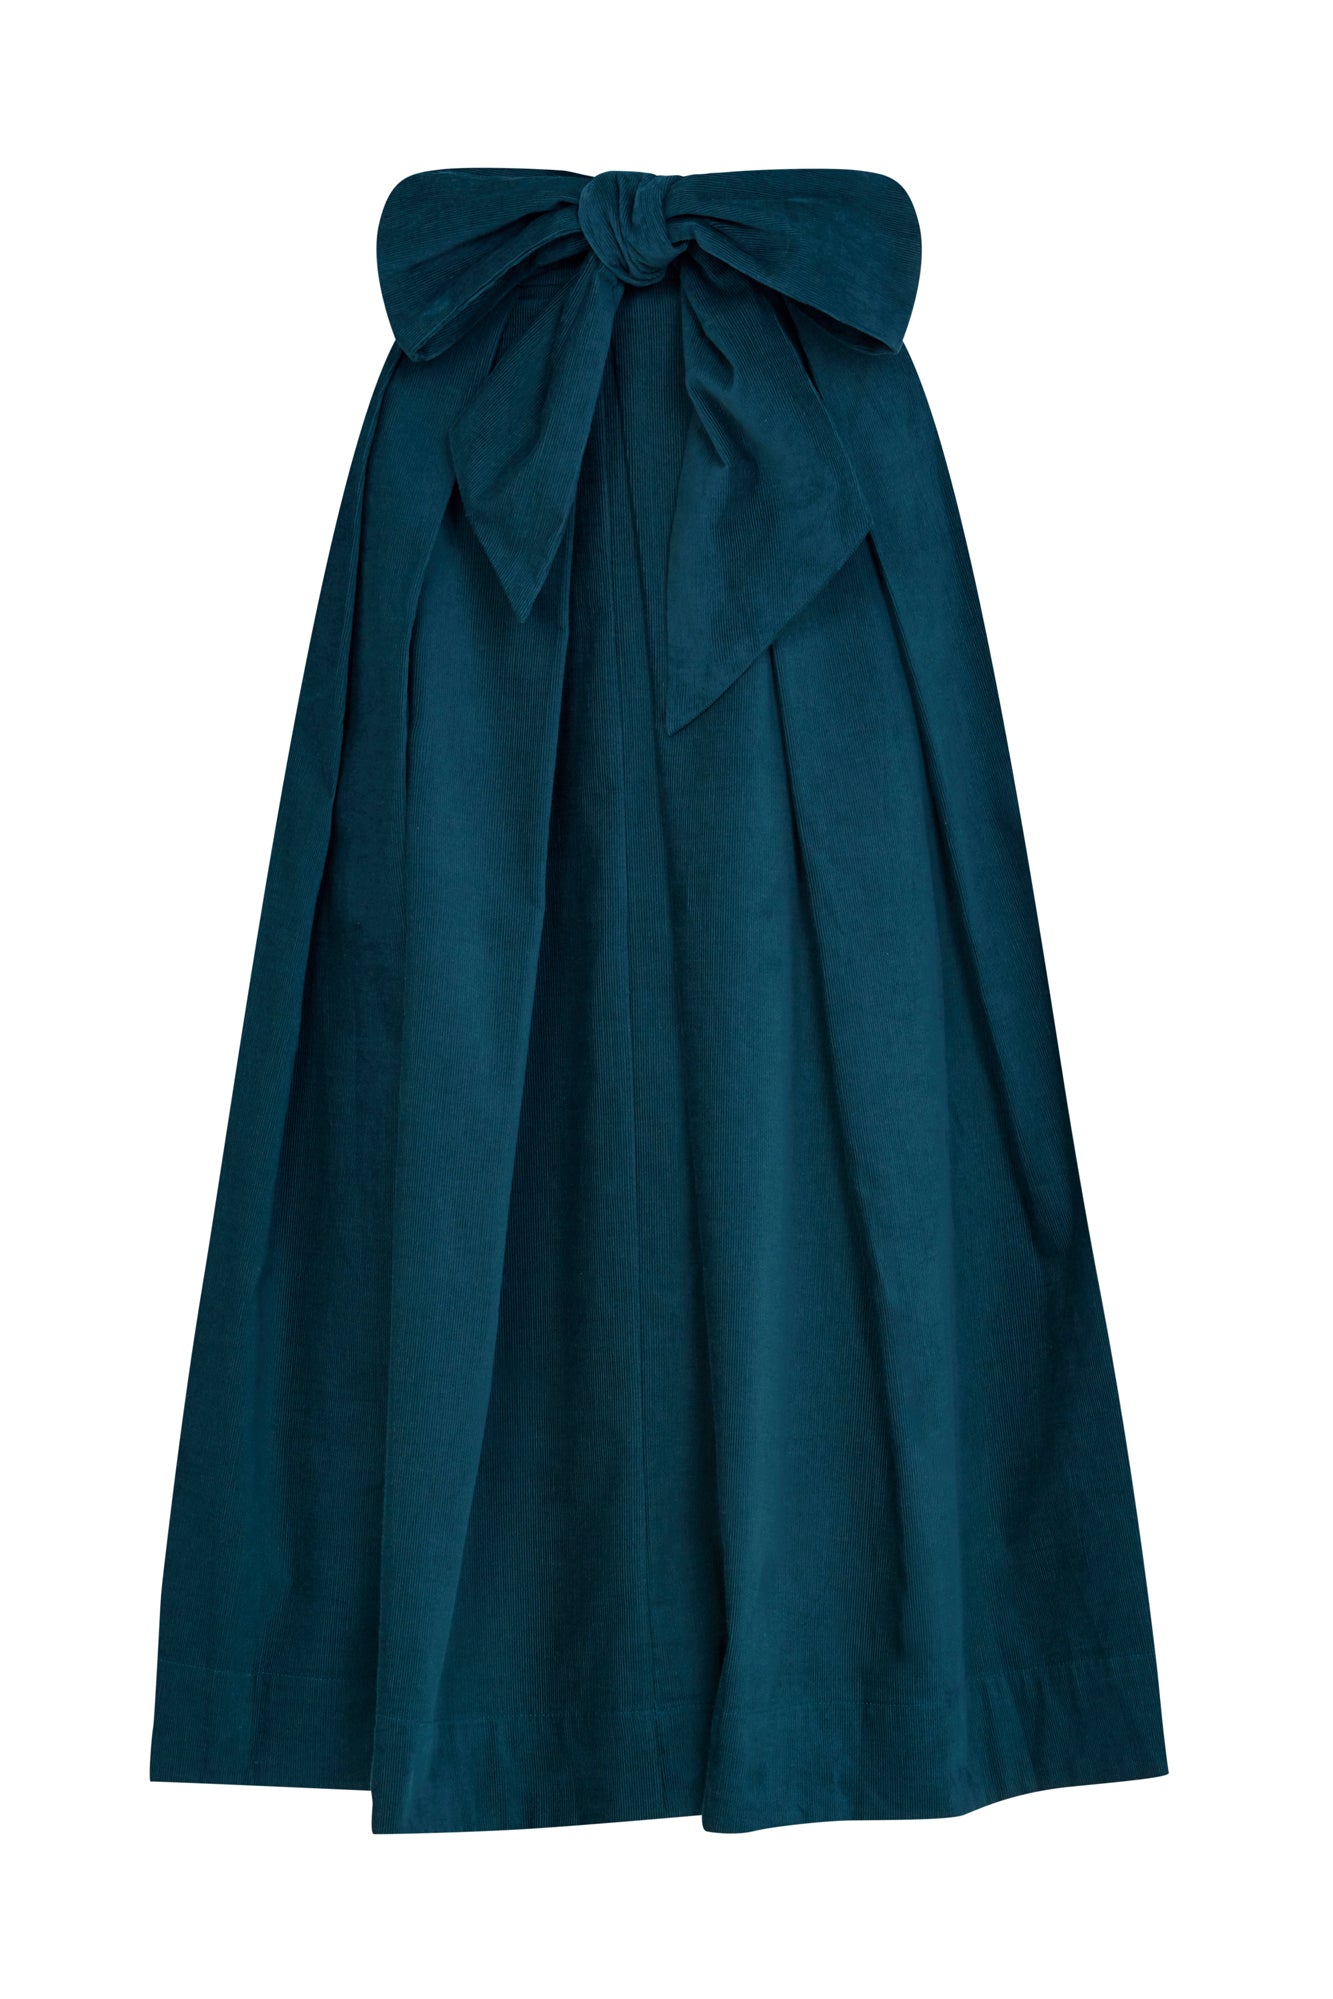 Image of Jemima Needlecord Deep Teal Skirt Carryover - Skirt